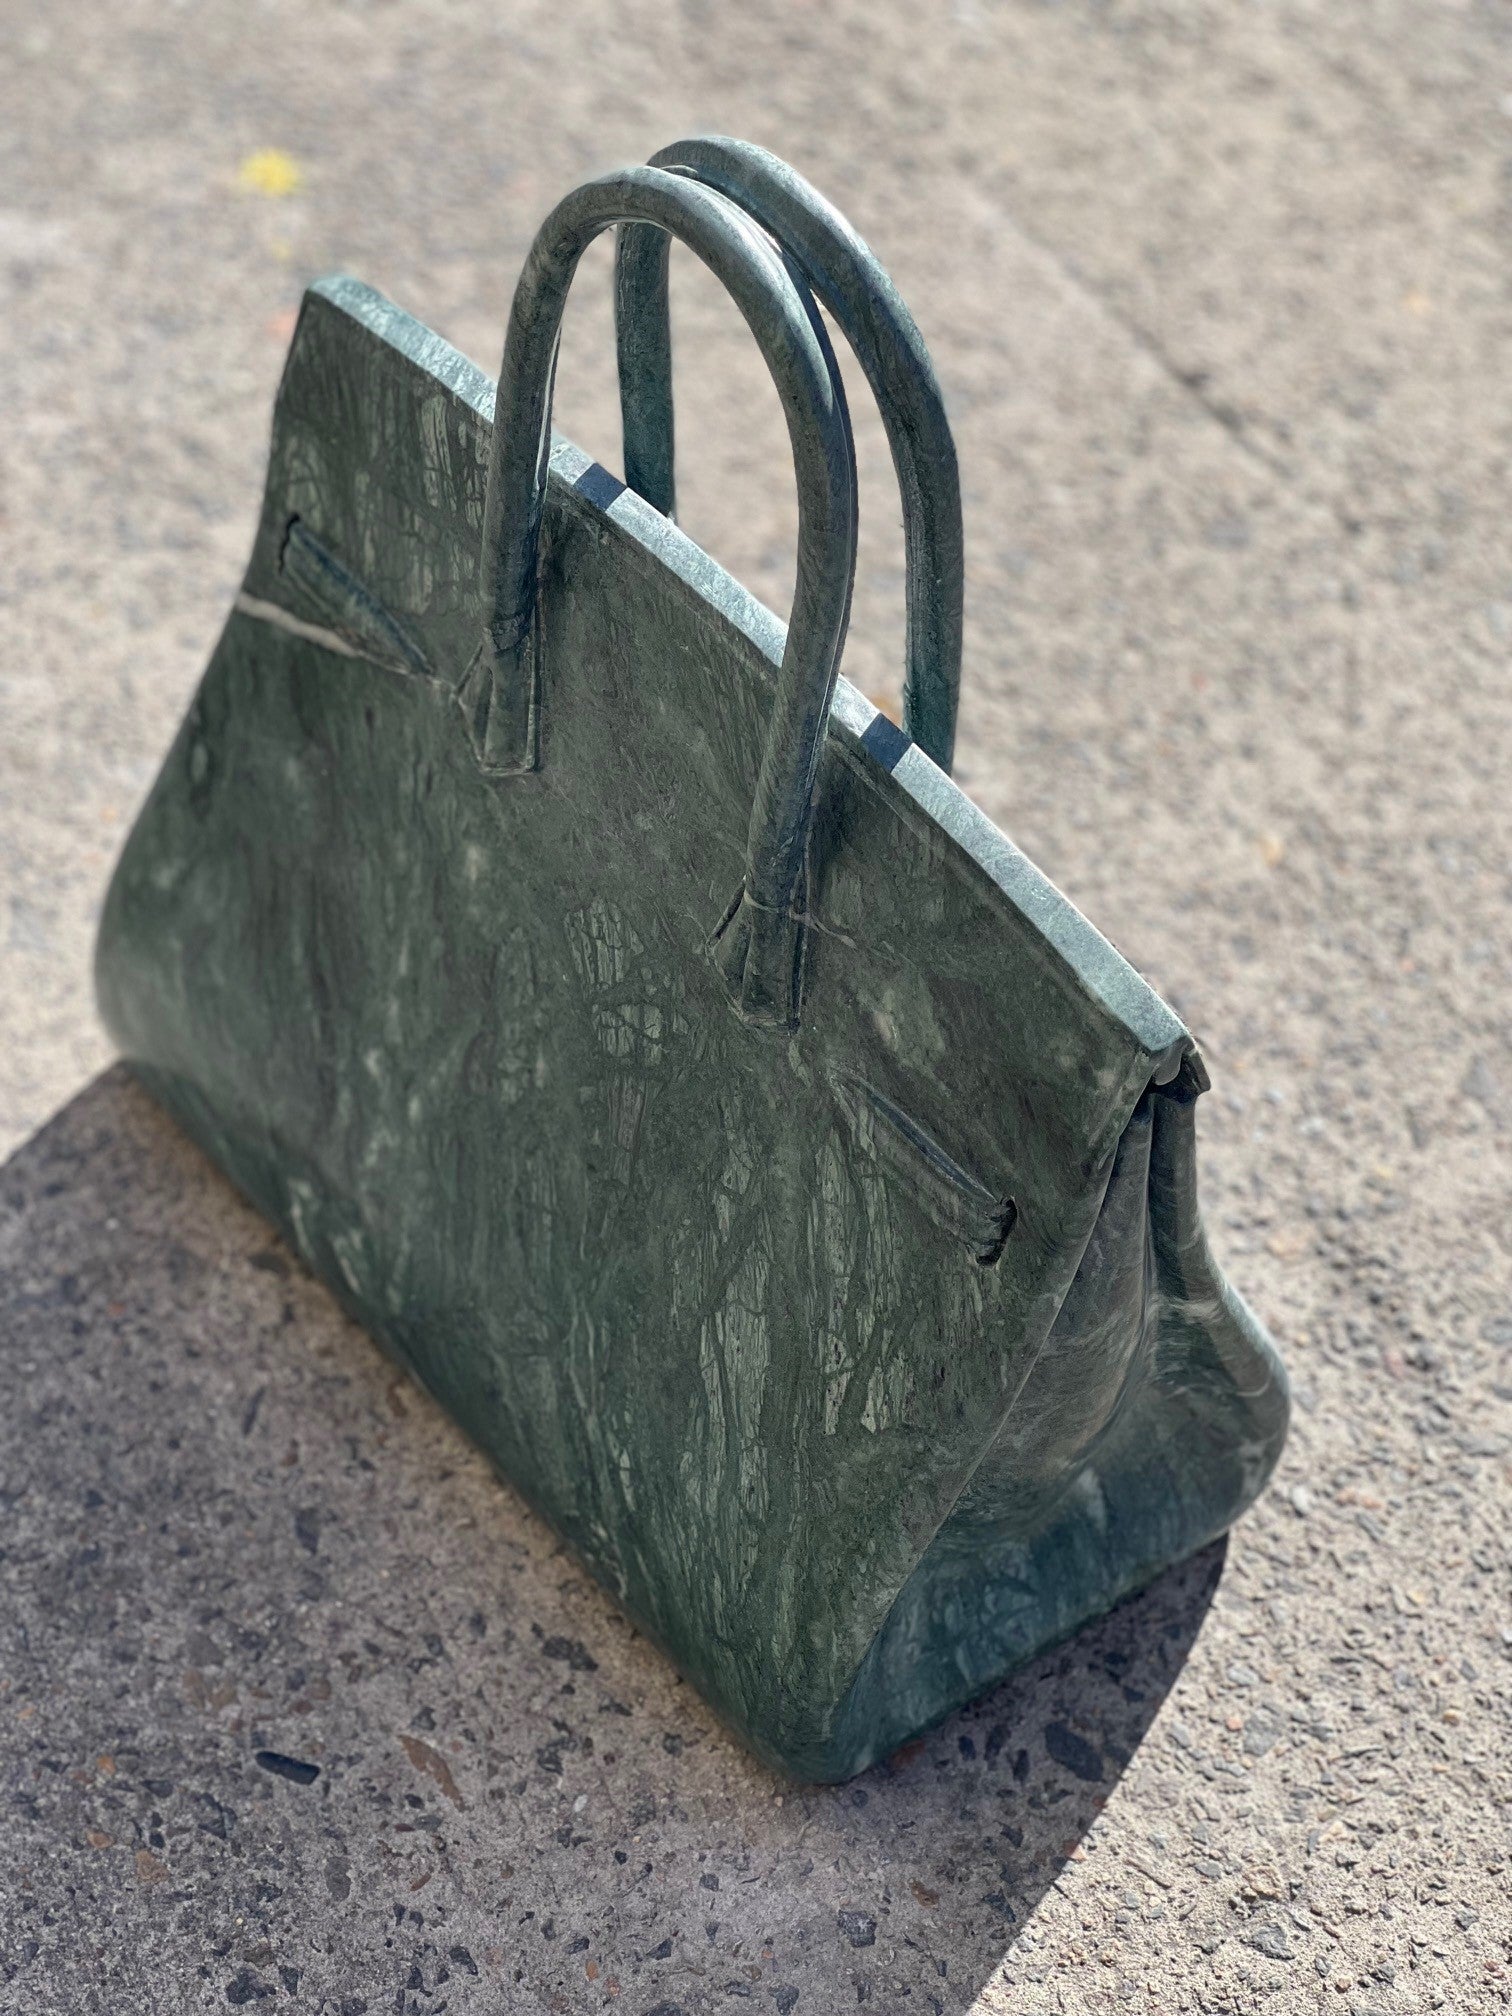 Handbag From Verde Guatemala Marble - Elsa Home And Beauty